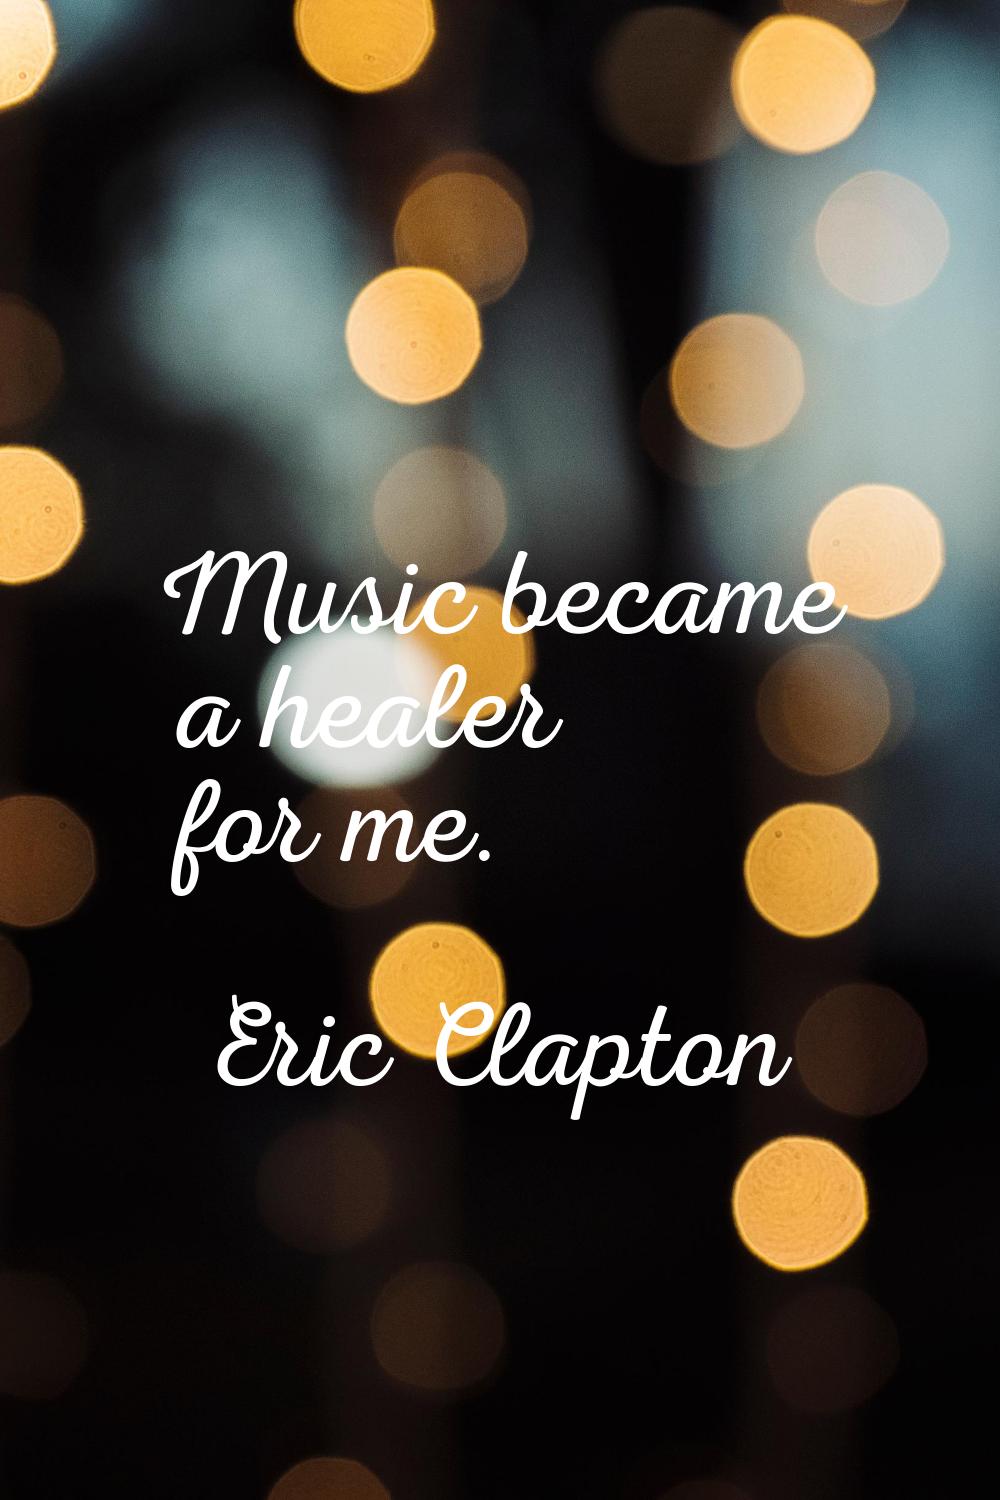 Music became a healer for me.